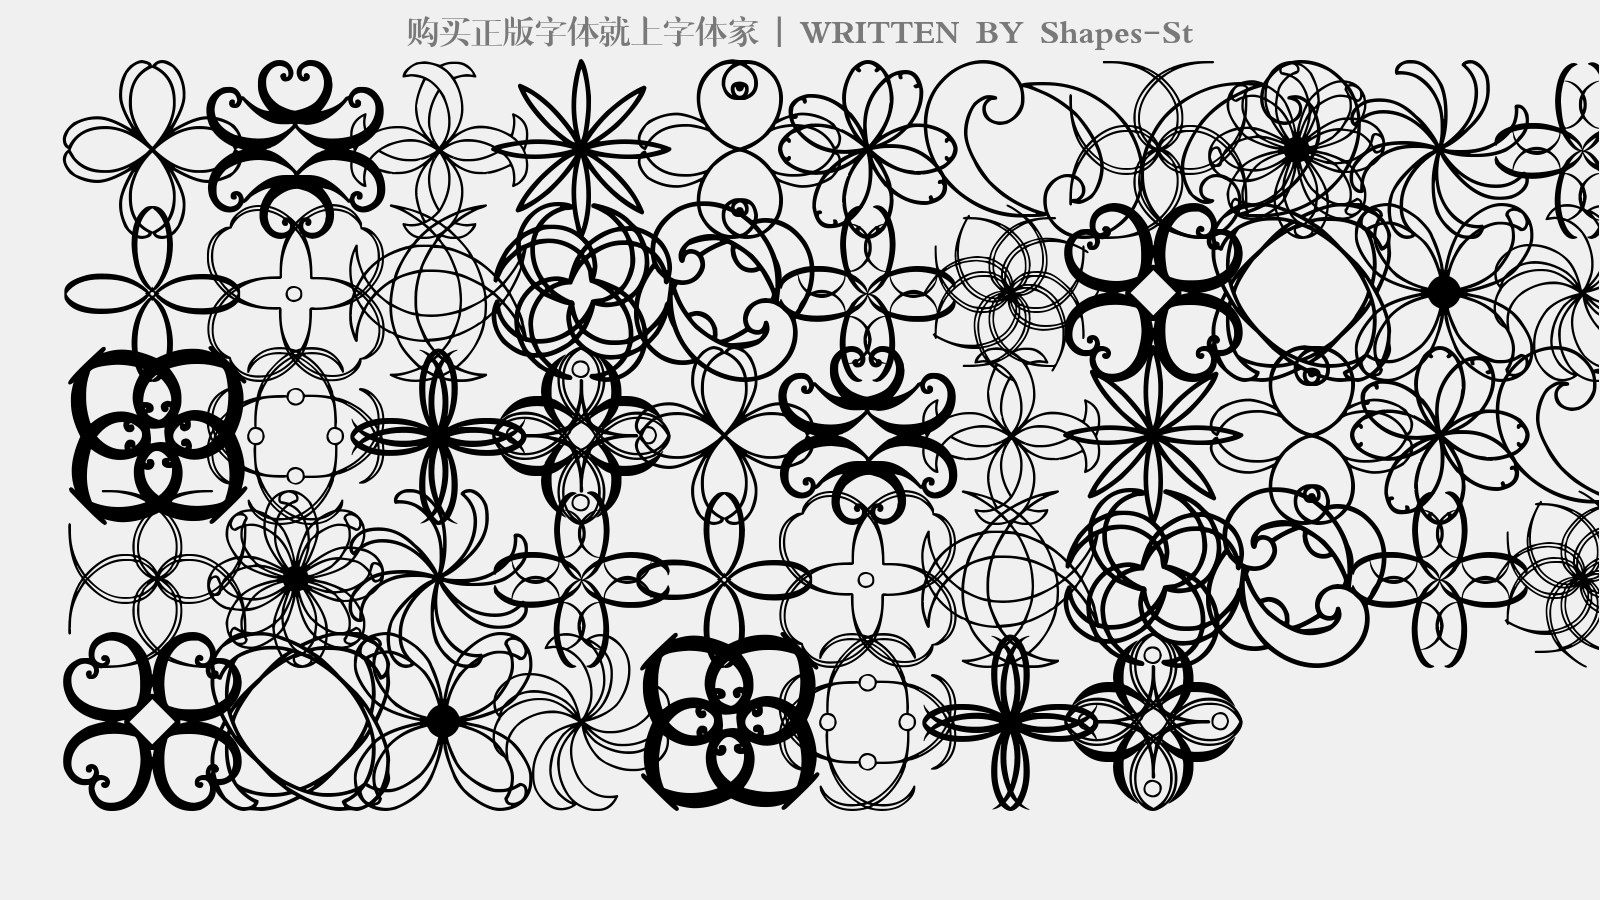 Shapes-St - 大写字母/小写字母/数字